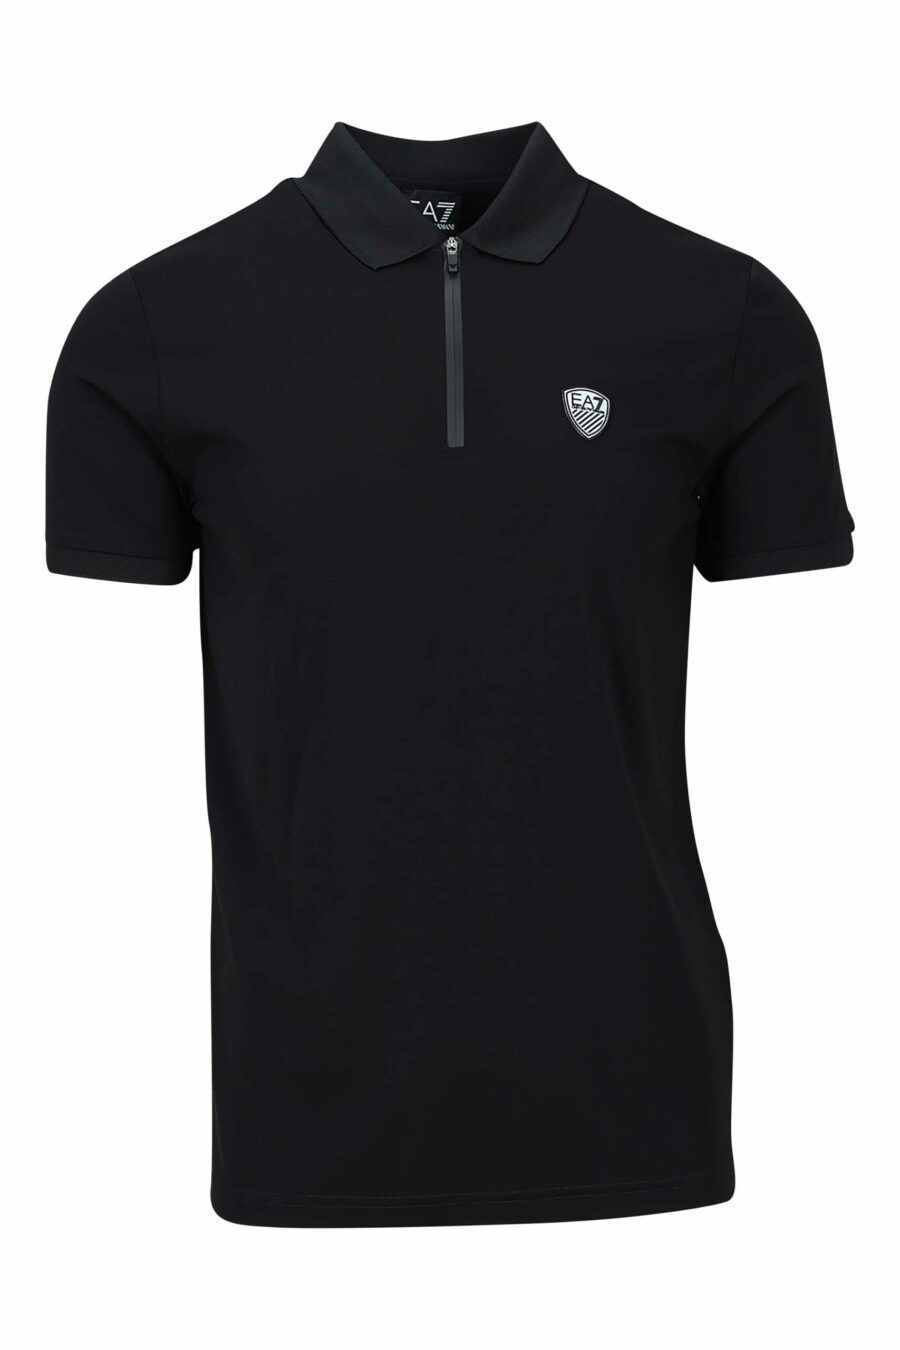 Schwarzes Poloshirt mit Mini-Logo "lux identity" - 8057767614805 skaliert